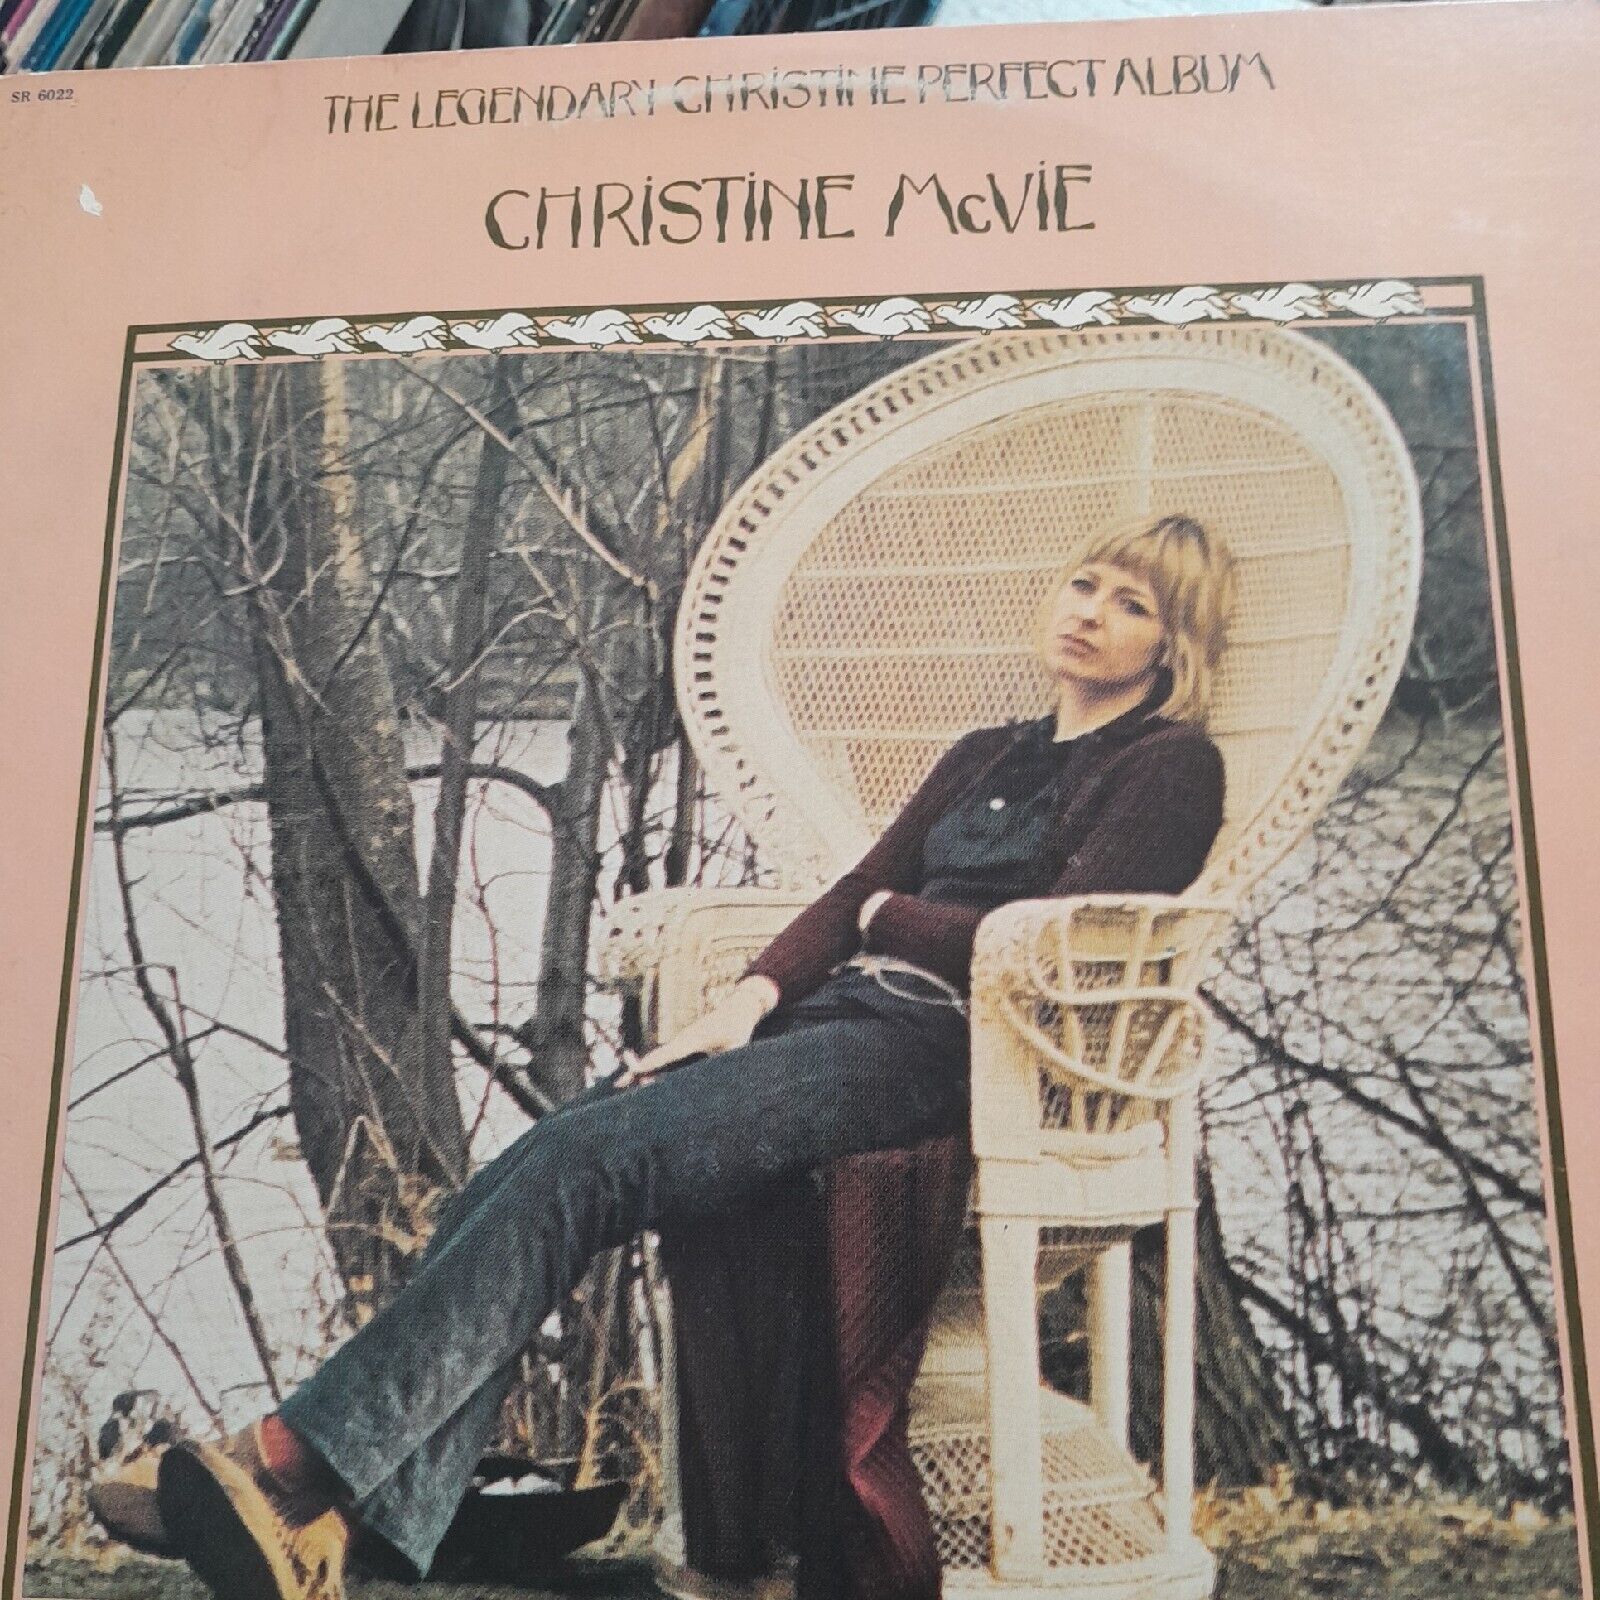 CHRISTINE MCVIE “LEGENDARY CHRISTINE PERFECT ALBUM” ORIGINAL 1976 LP, SIRE, VG+